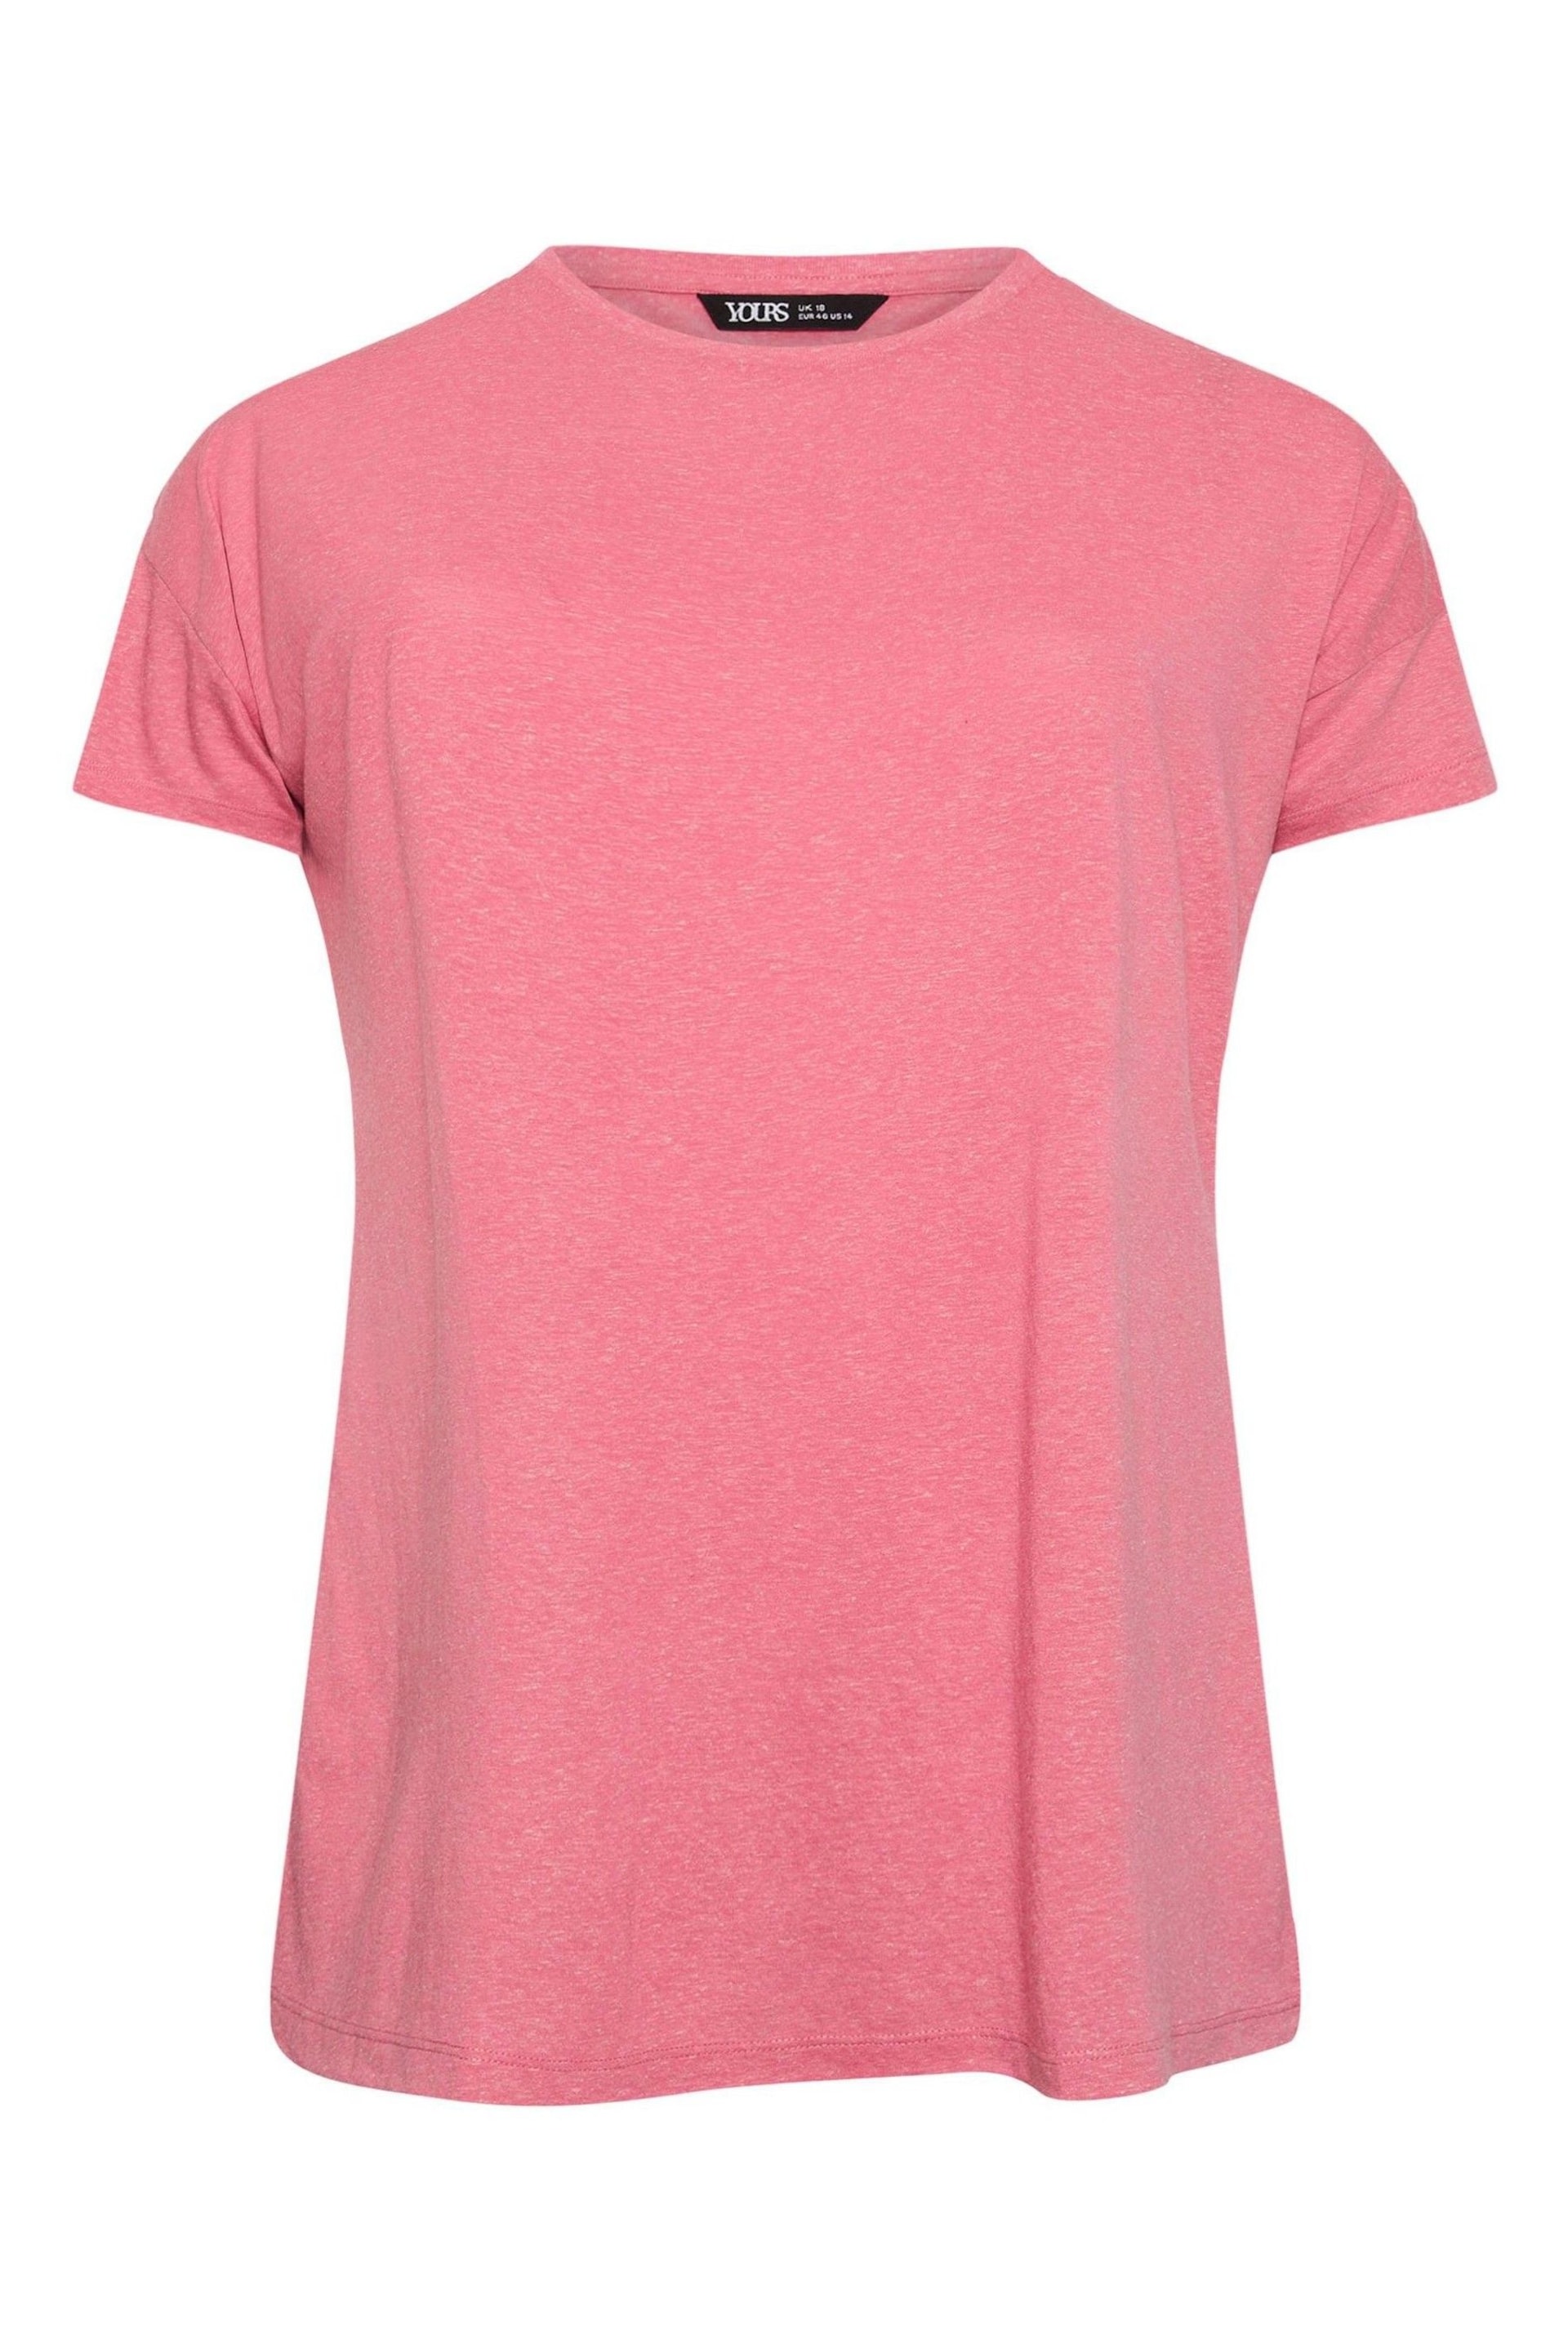 Yours Curve Pink Oversize Side Split Linen Look T-Shirt - Image 5 of 5